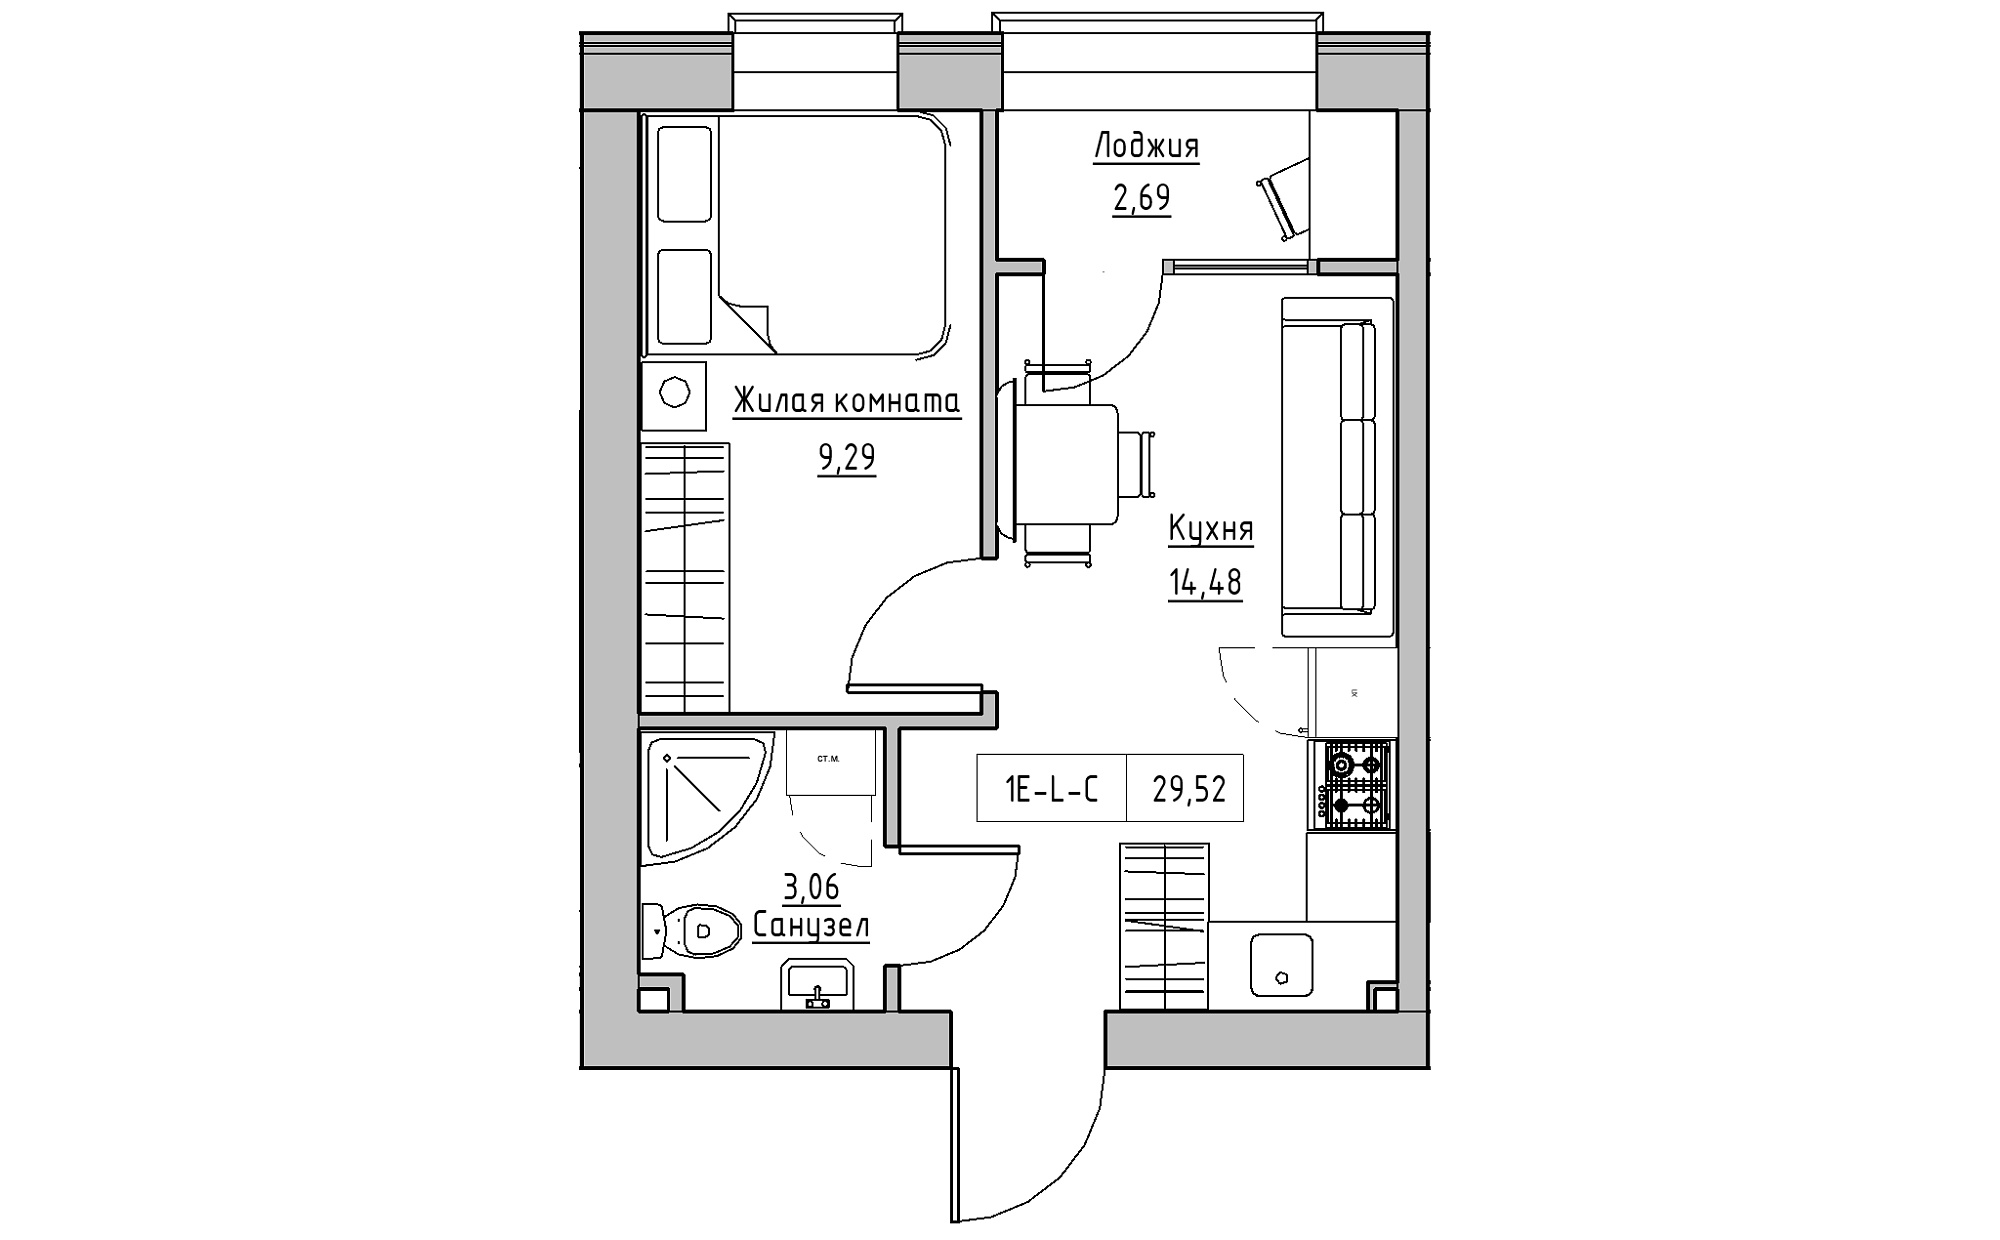 Planning 1-rm flats area 29.52m2, KS-022-04/0006.